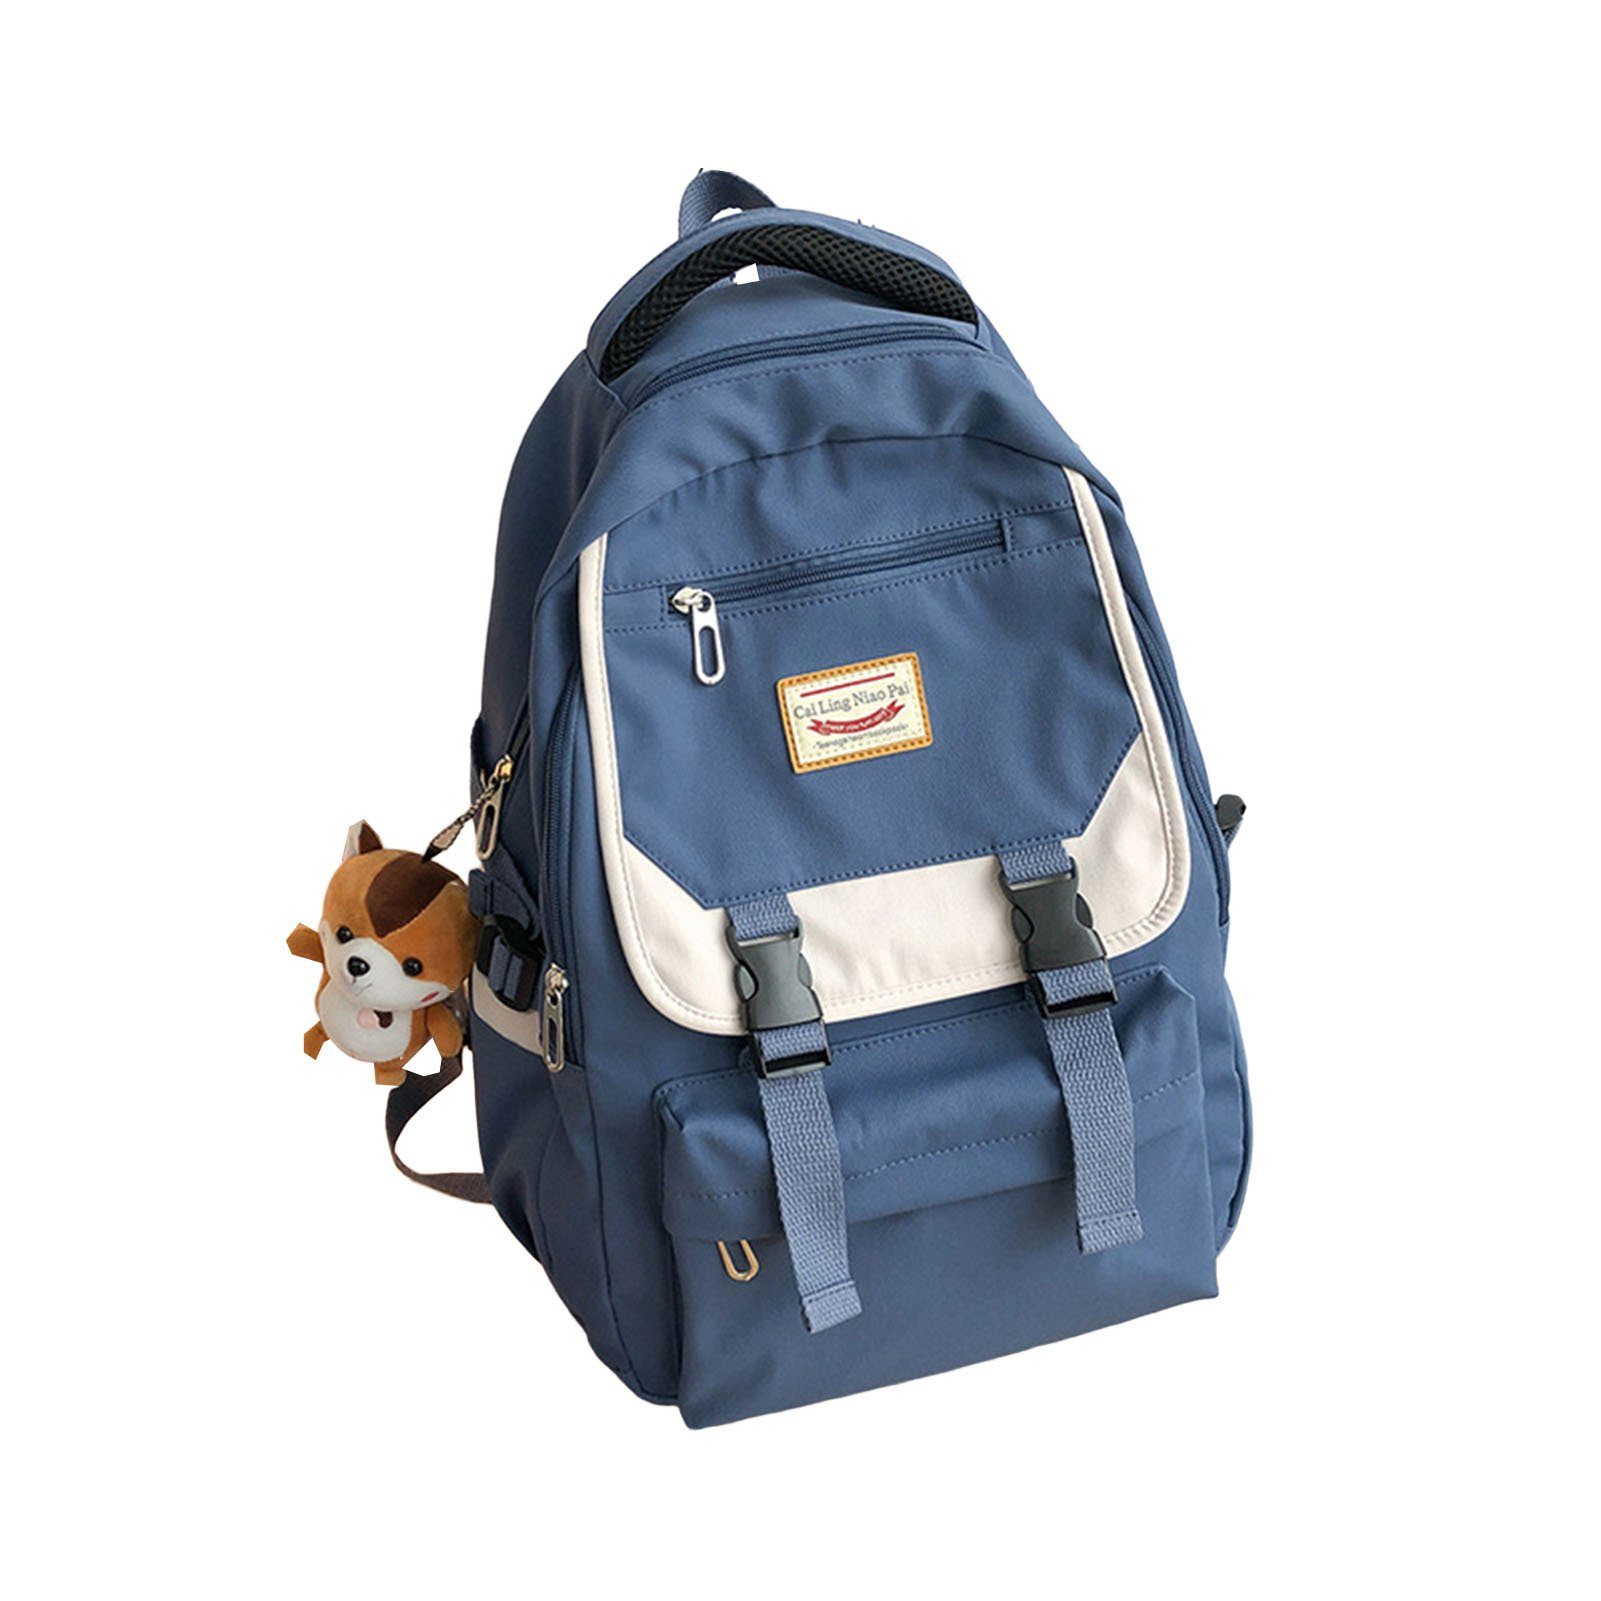 Blusmart Rucksack Mode Einfacher Schultasche Rucksack without Kapazität pendant blue Reißverschluss Große